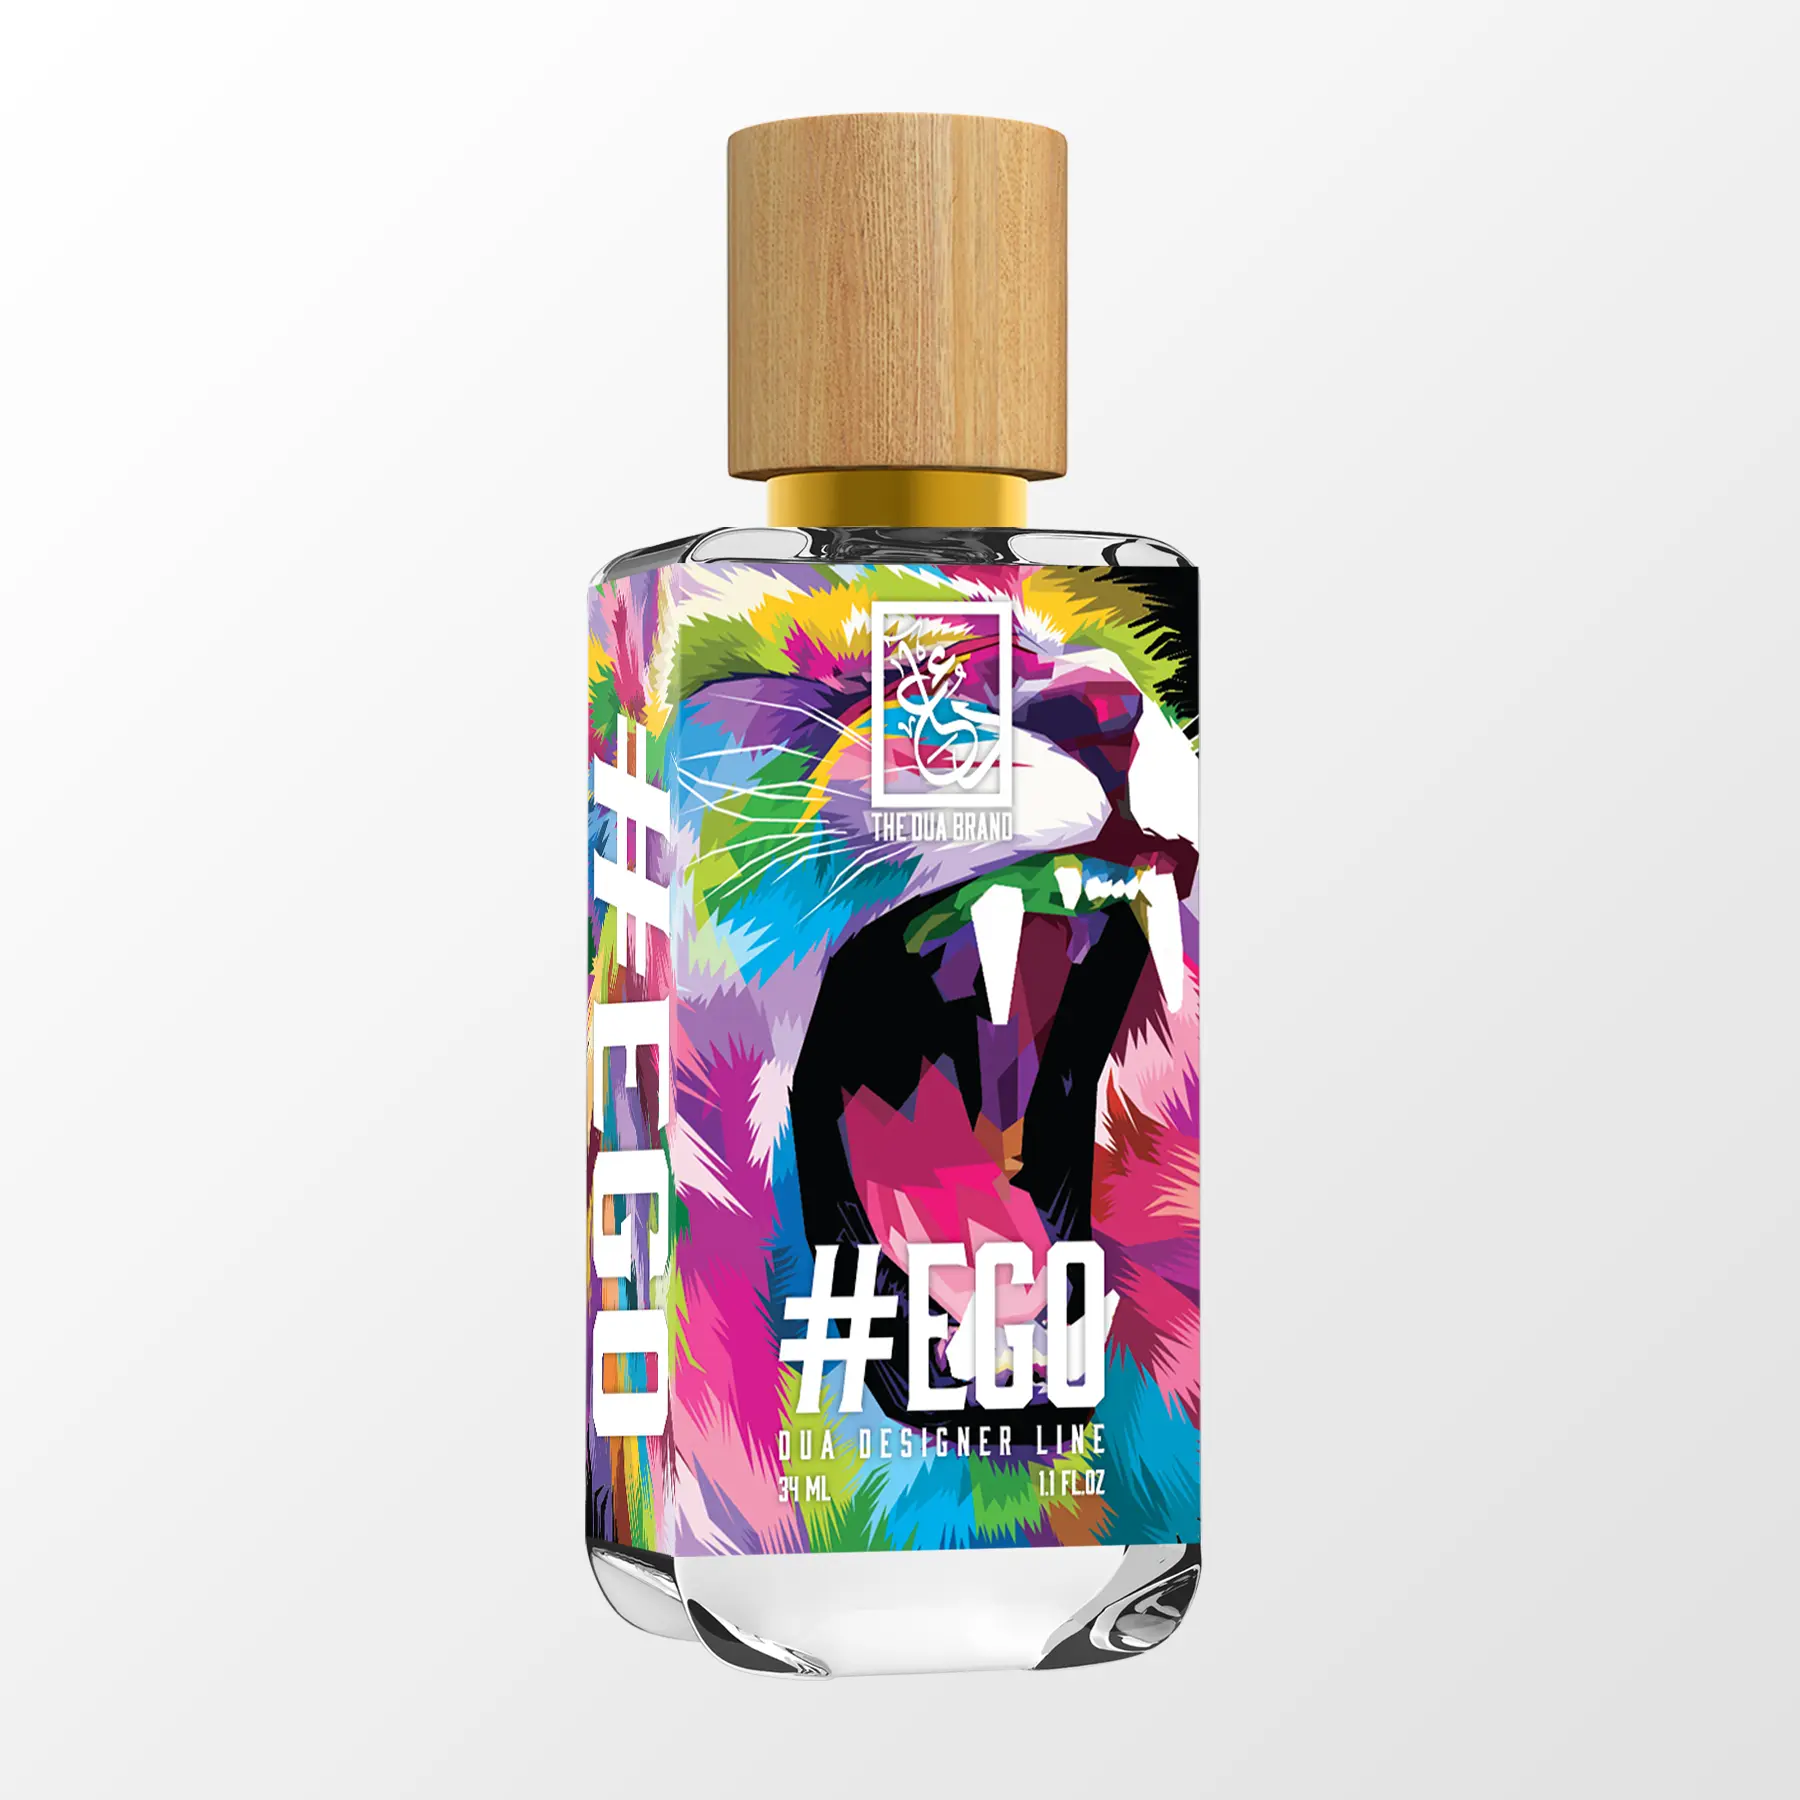 #Ego - Dua Fragrances - Inspired by Egoiste (Original 1990 Formulation) Chanel - Masculine Perfume - 34ml/1.1 fl oz - Extrait de Parfum